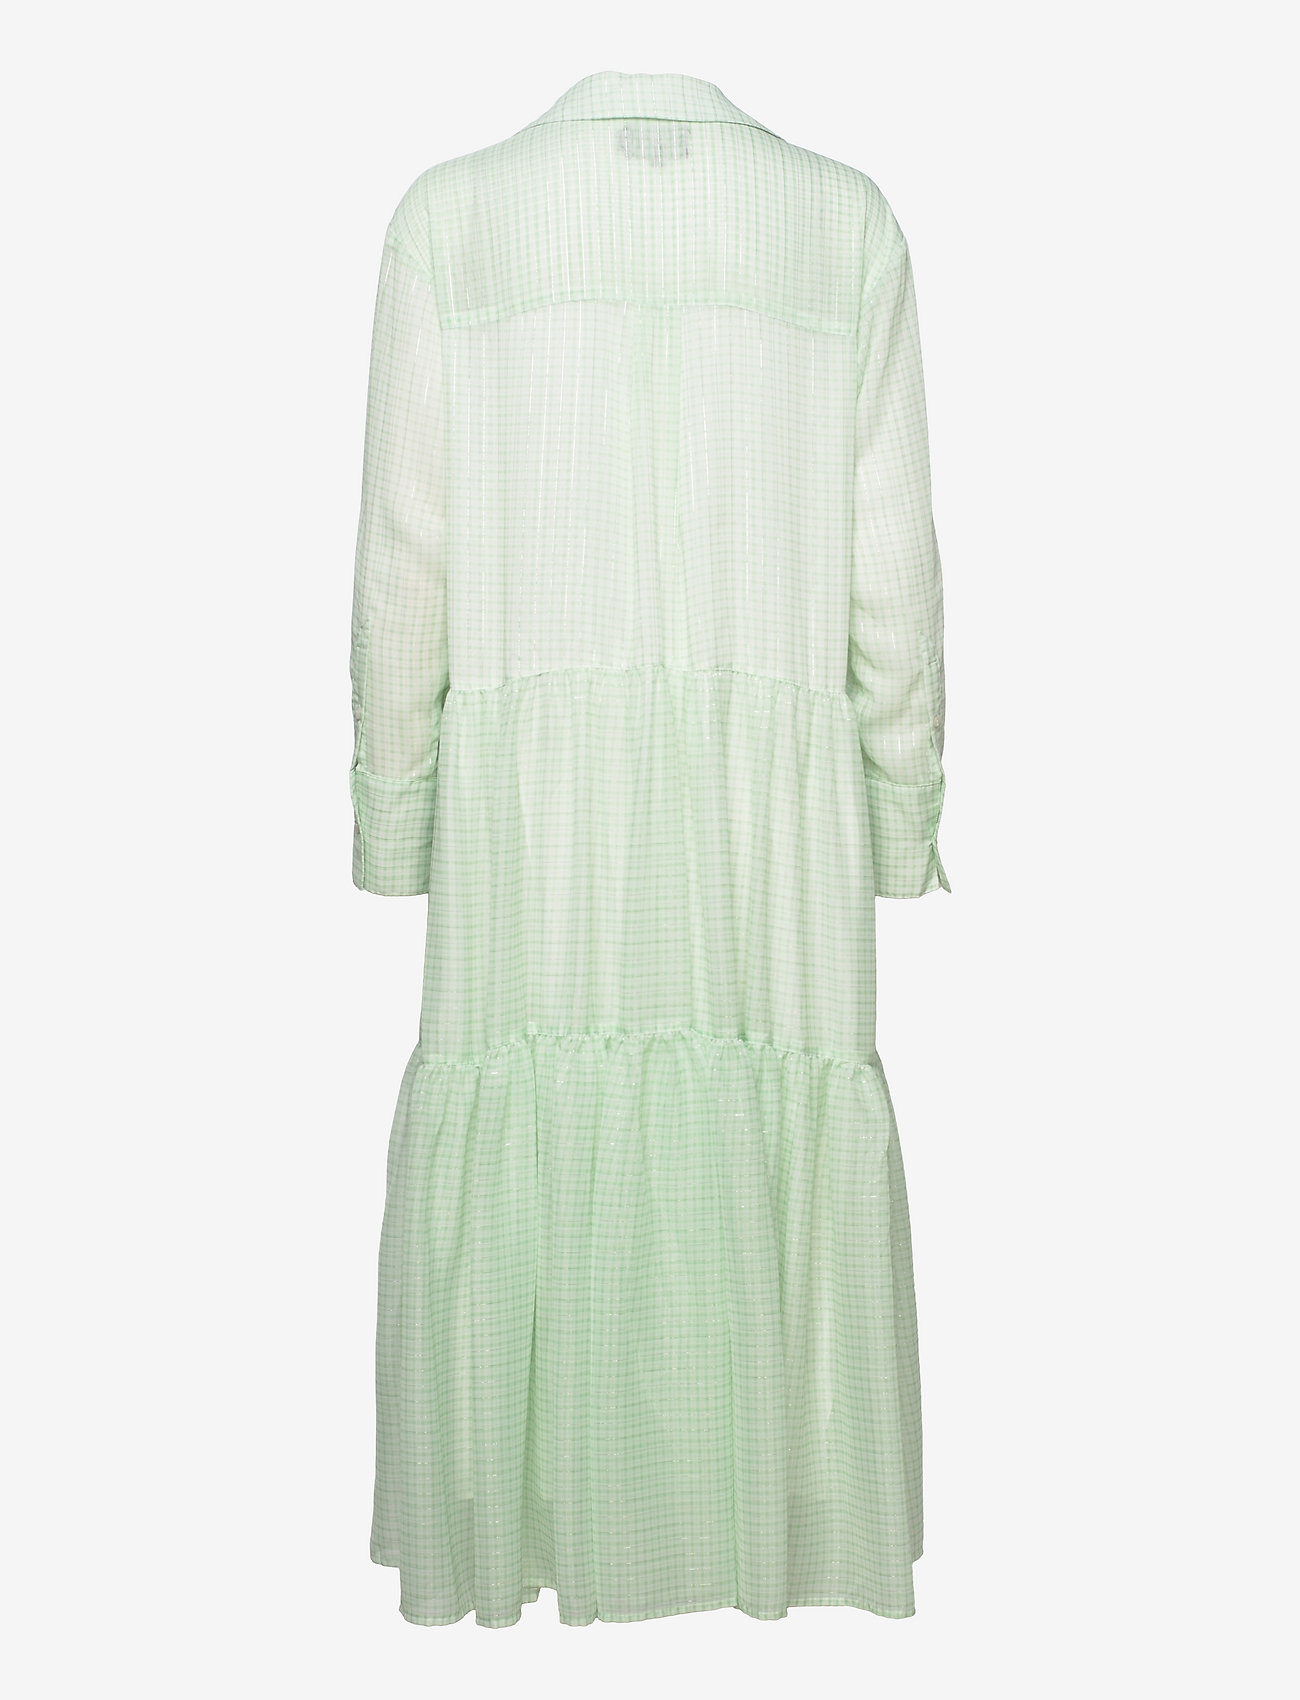 Birgitte Herskind - Trine Ltd. Dress - Light Green Checks - maxiklänningar - light green checks - 1